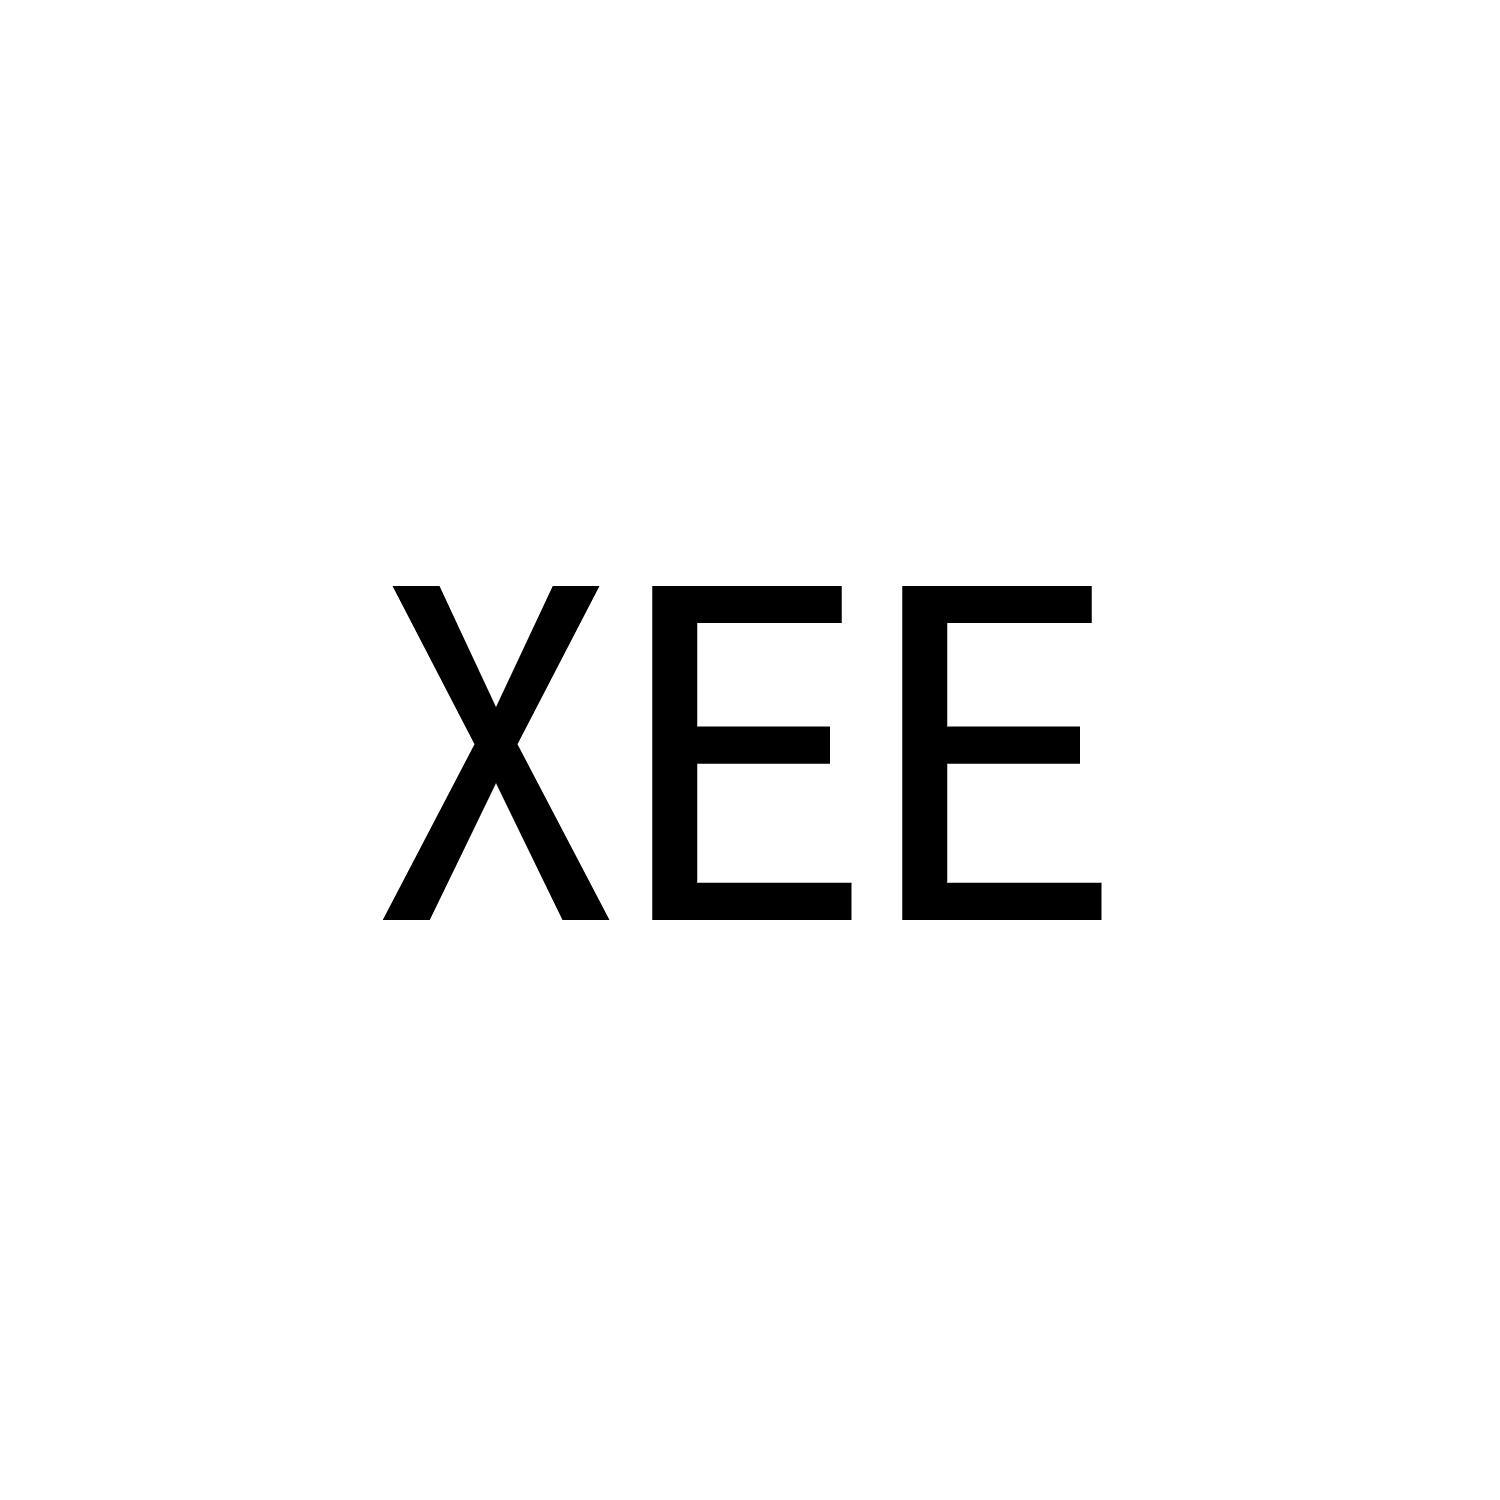 XEE